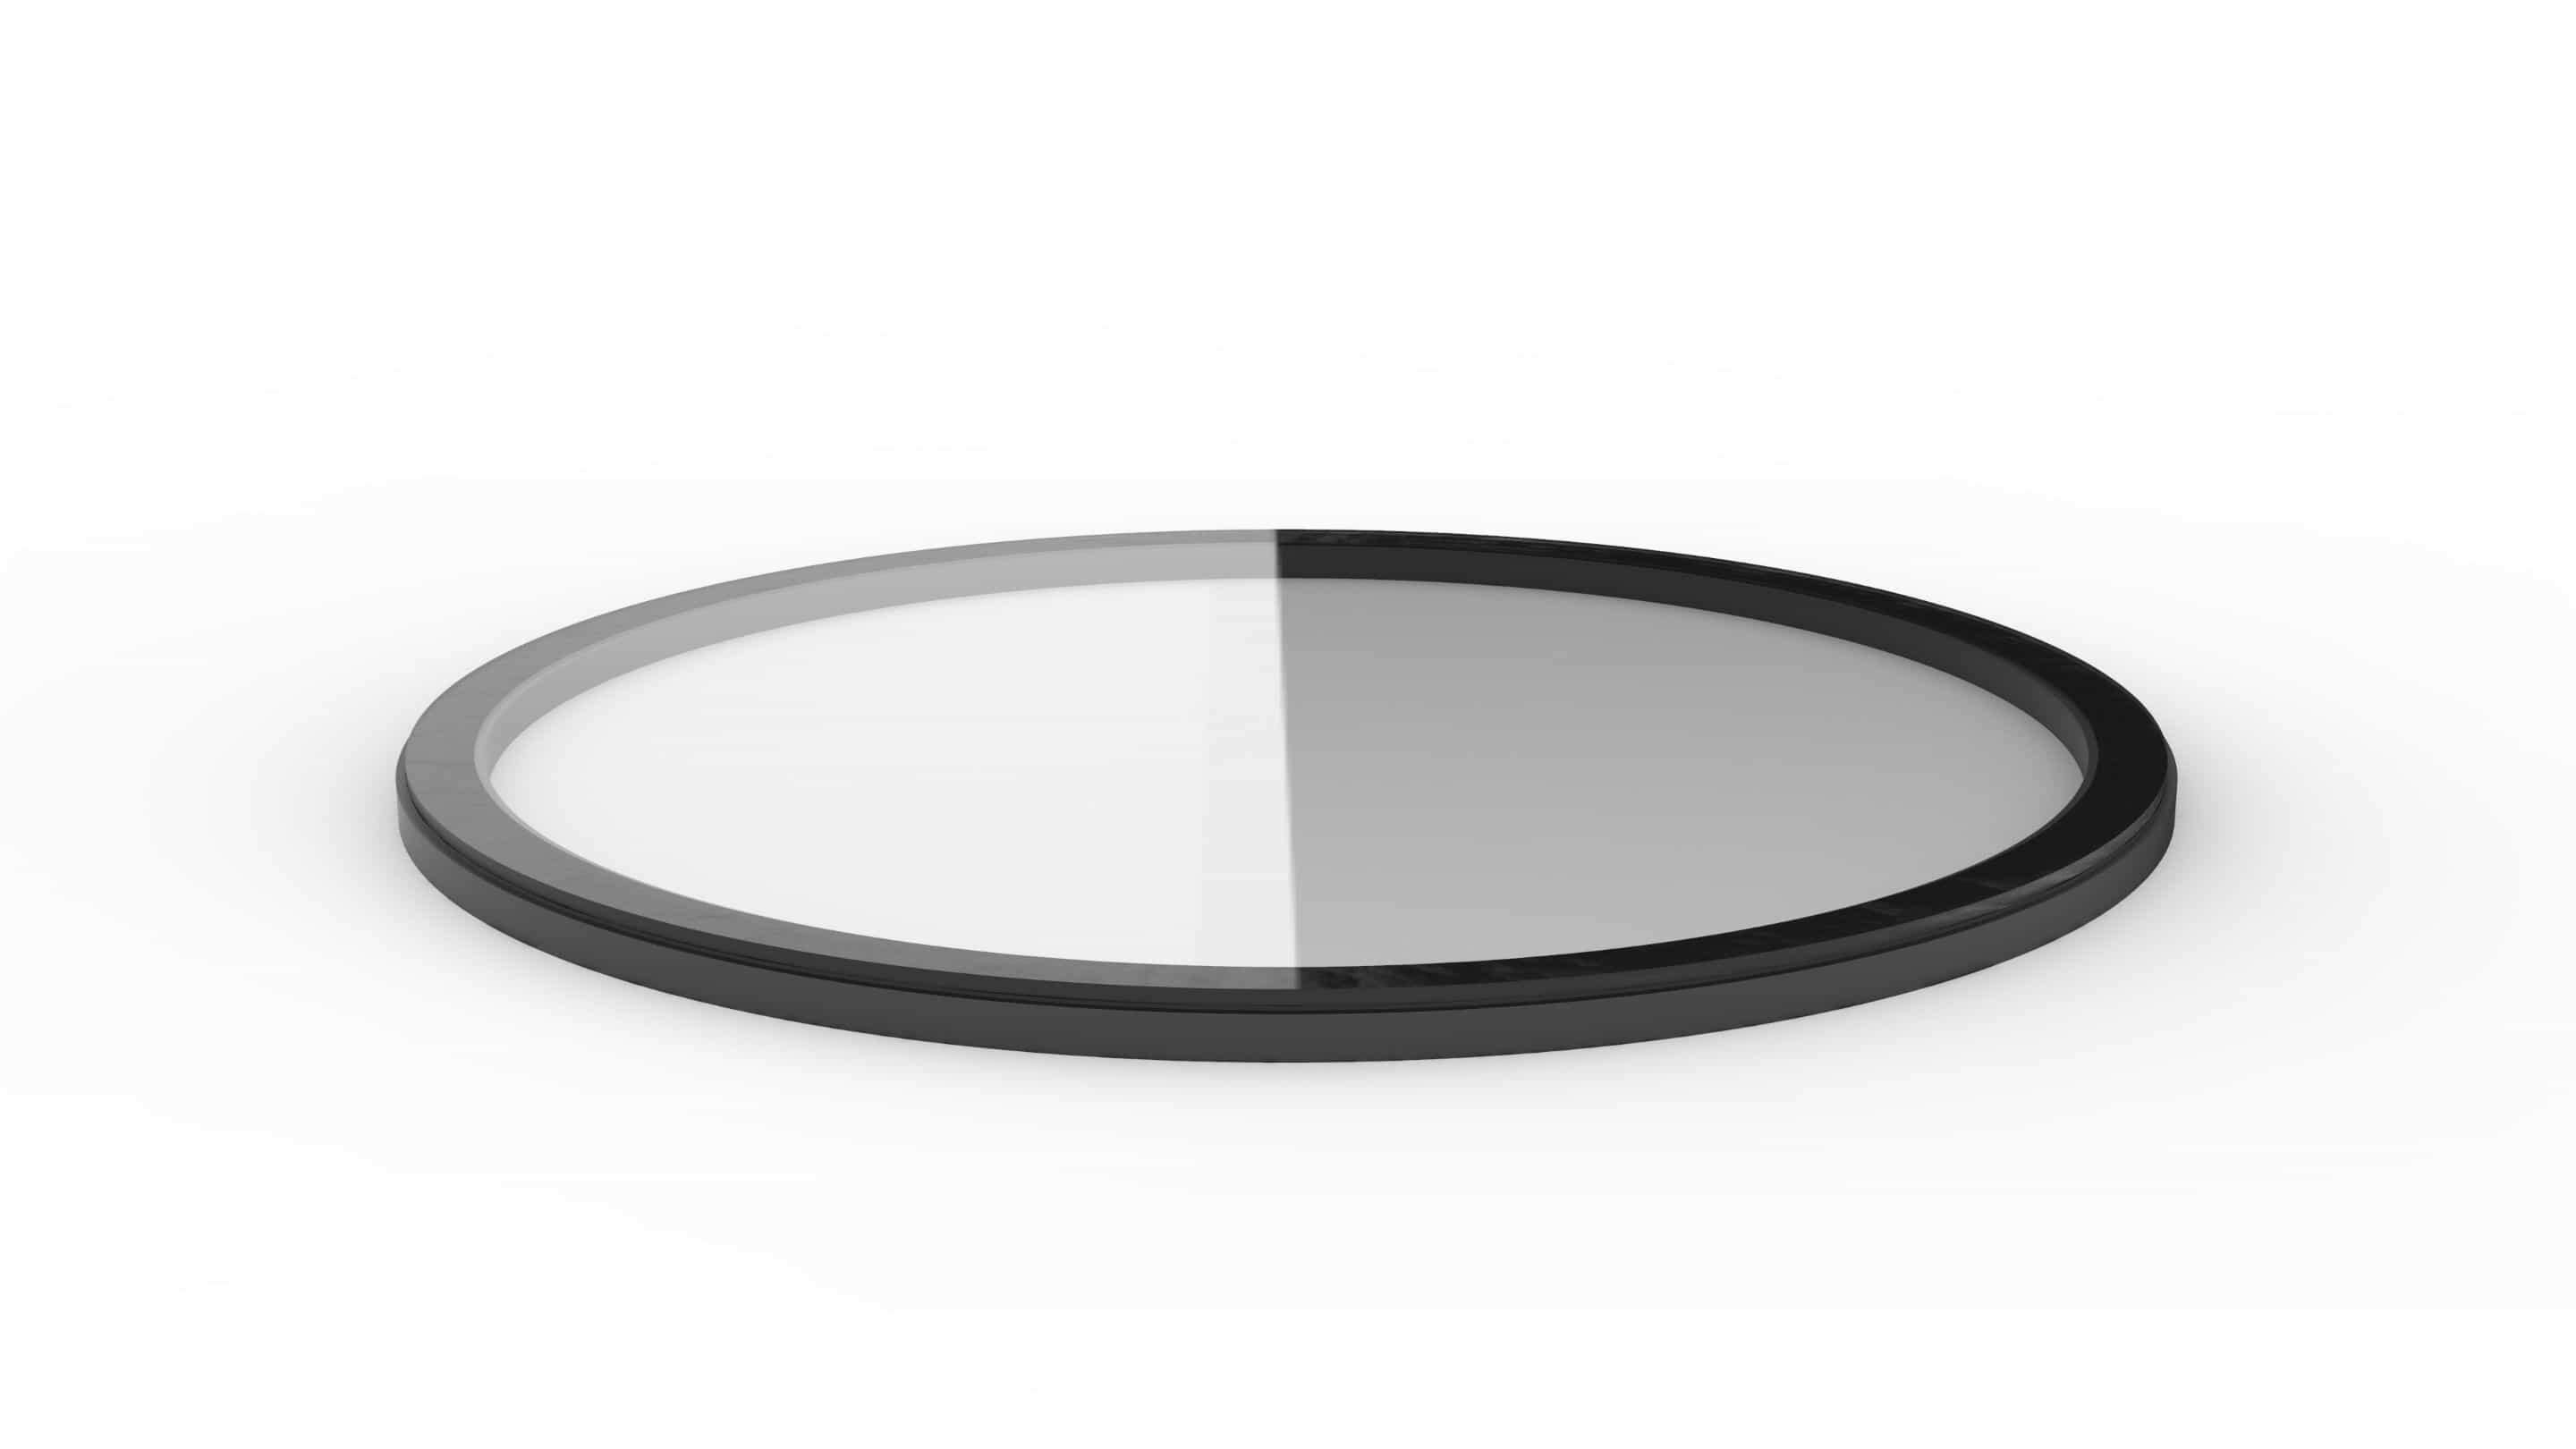 Impactinator® Glass - זכוכית דבק על טבעת אלומיניום, חפץ עגול בשחור לבן